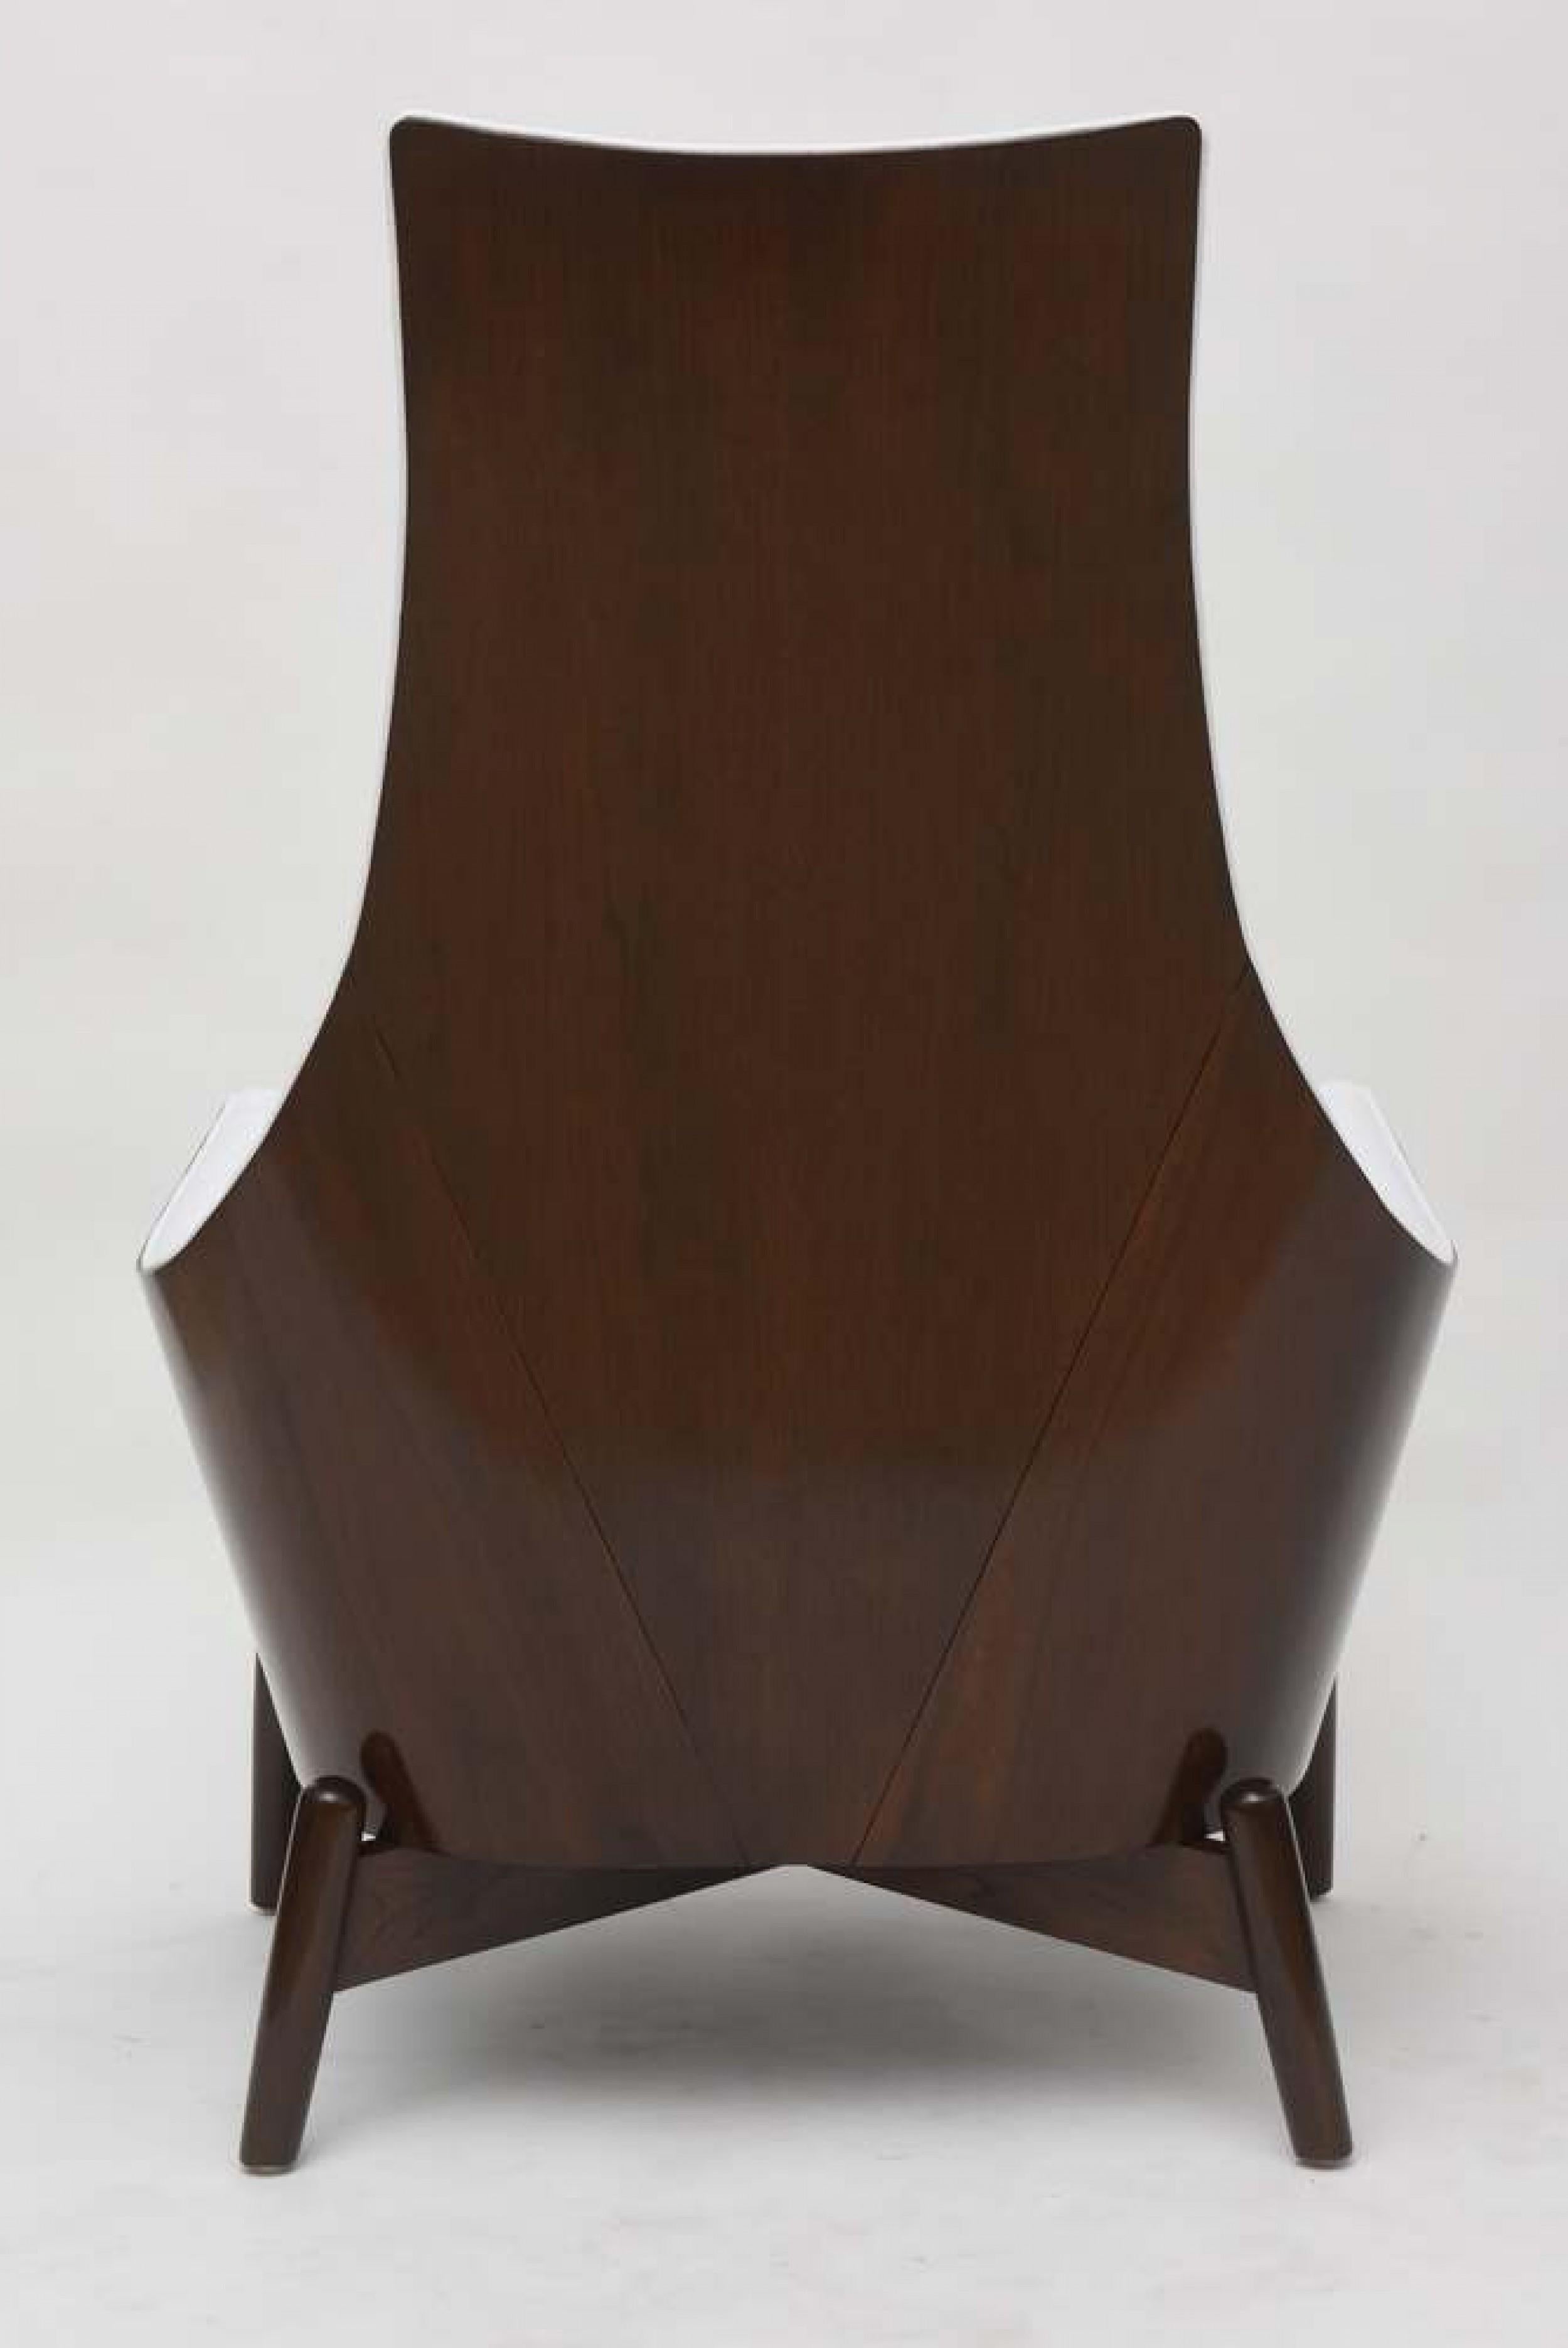 Ib Kofod Larsen Midcentury Danish Modern Walnut and White Upholstery Armchair For Sale 3